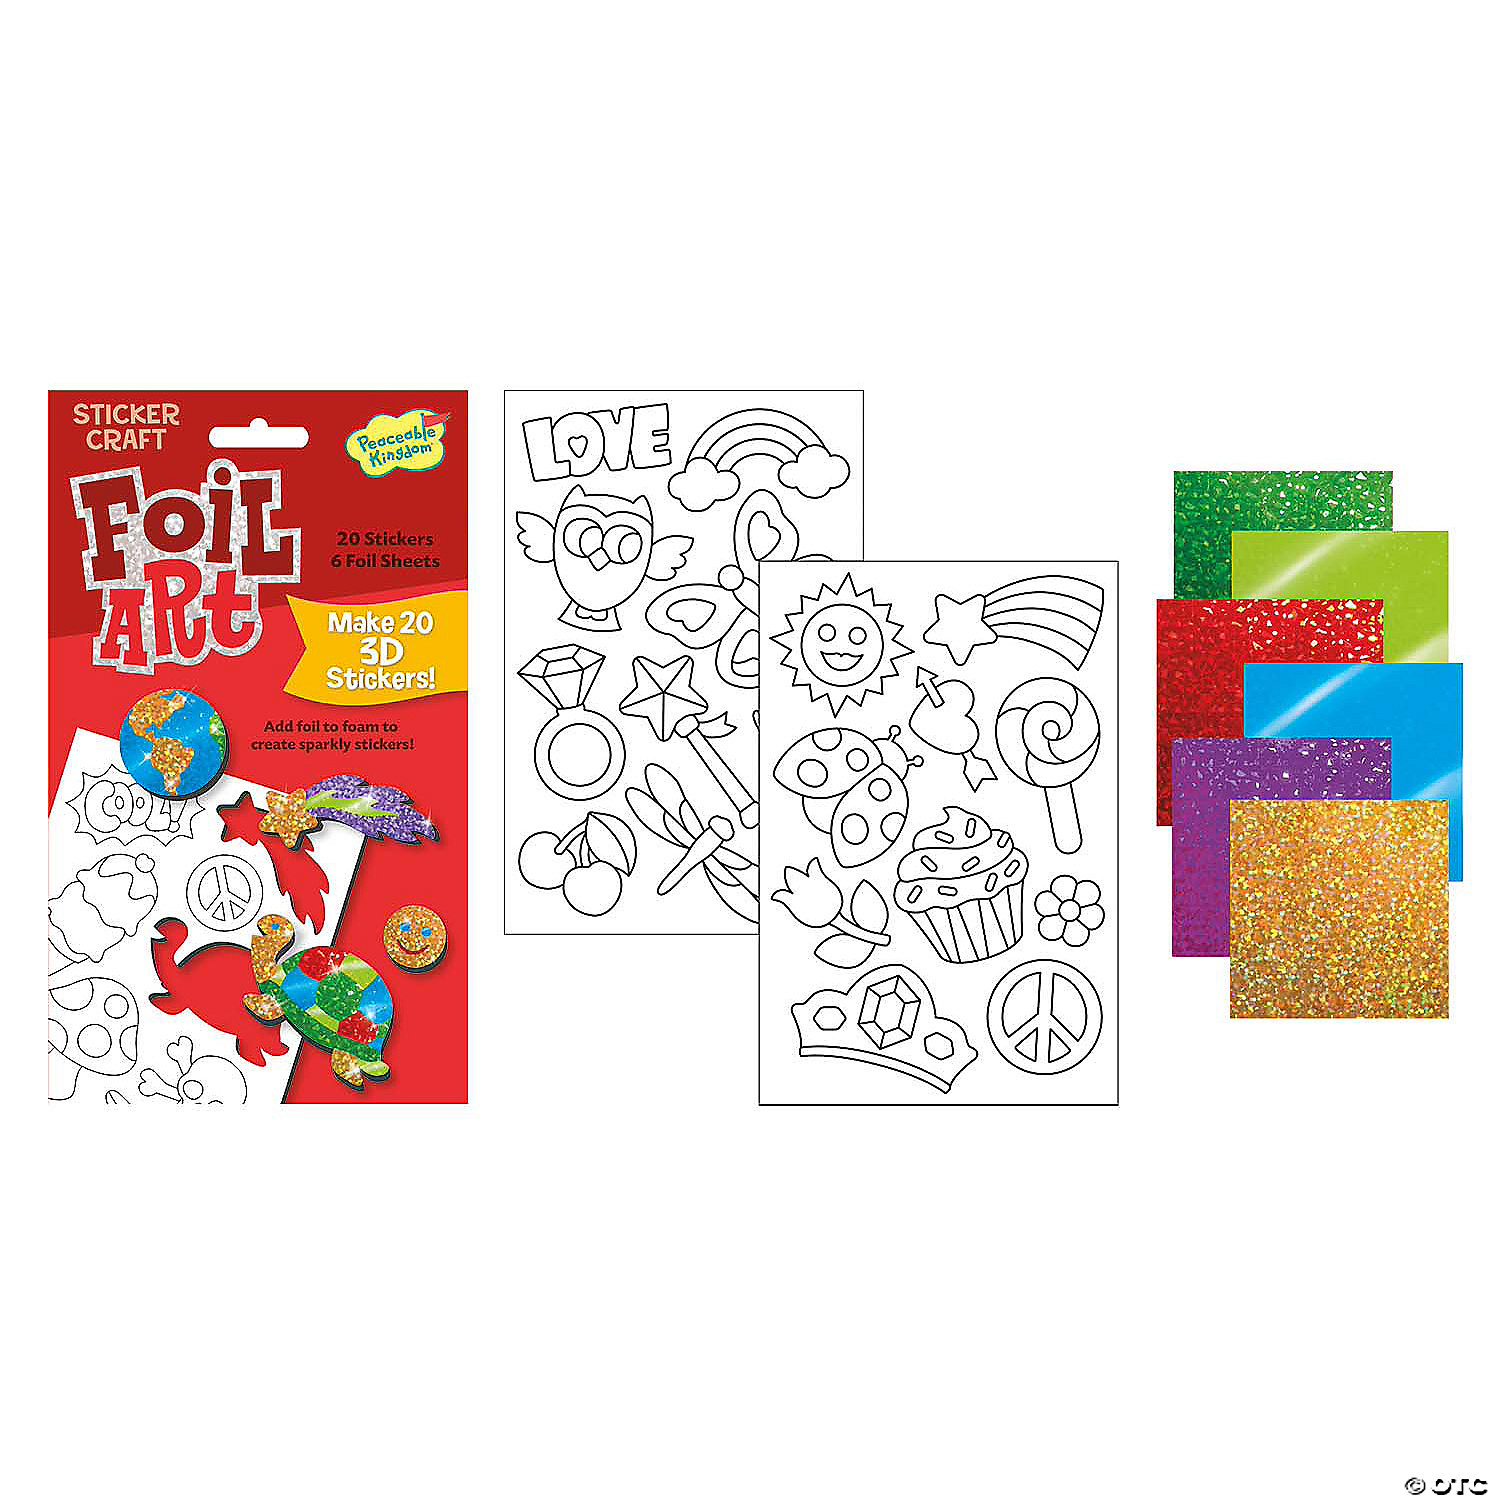 Peaceable Kingdom Sticker Crafts Make My Own Fun Stuff 3D Foil Art Stickers Kit for Kids